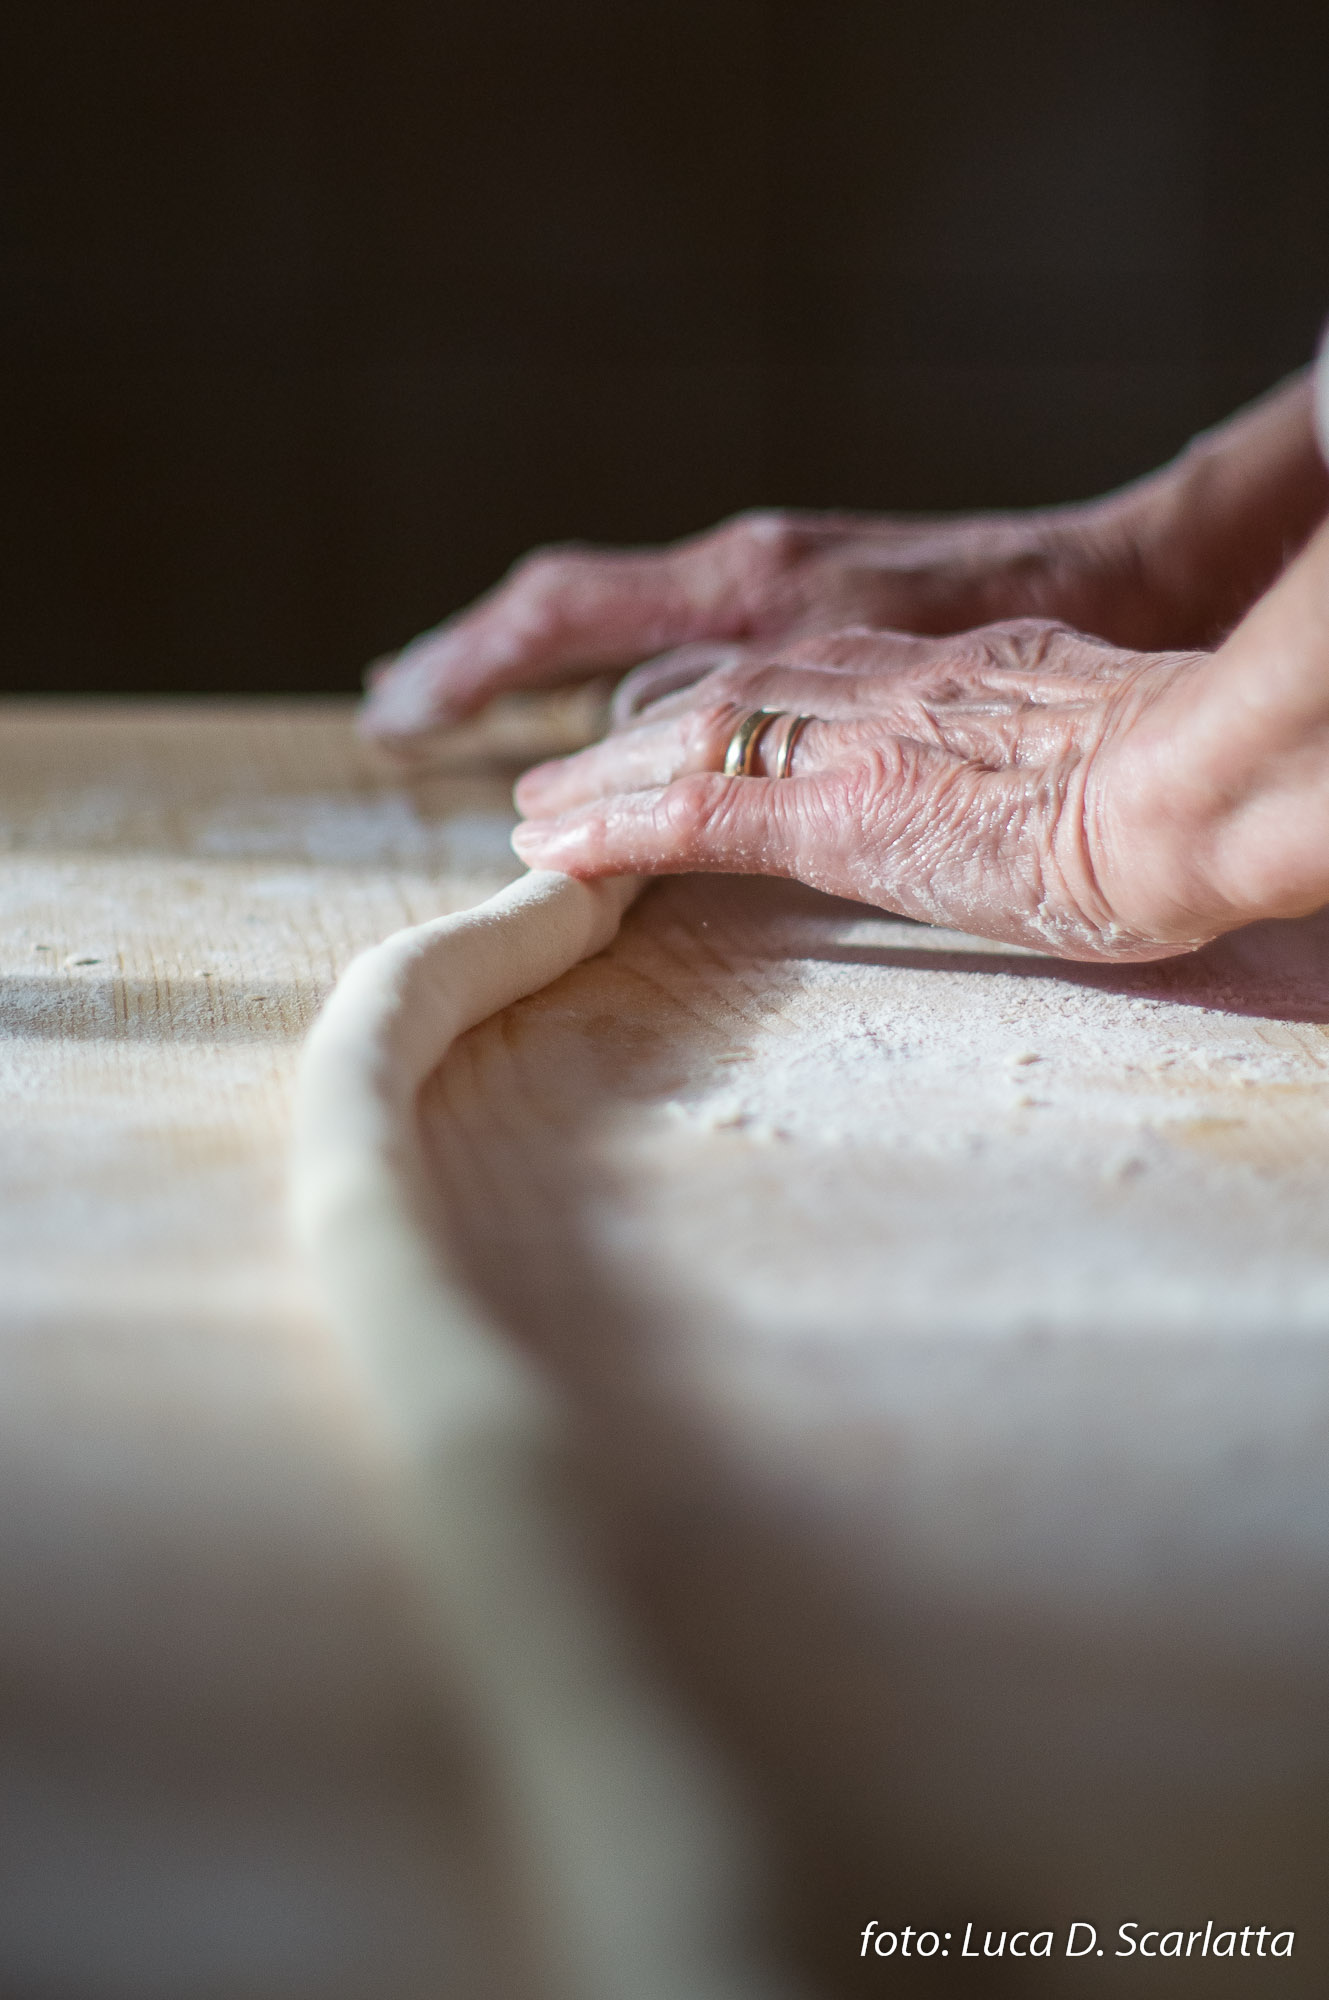 The gnocci Grandma Mary: Training dough...